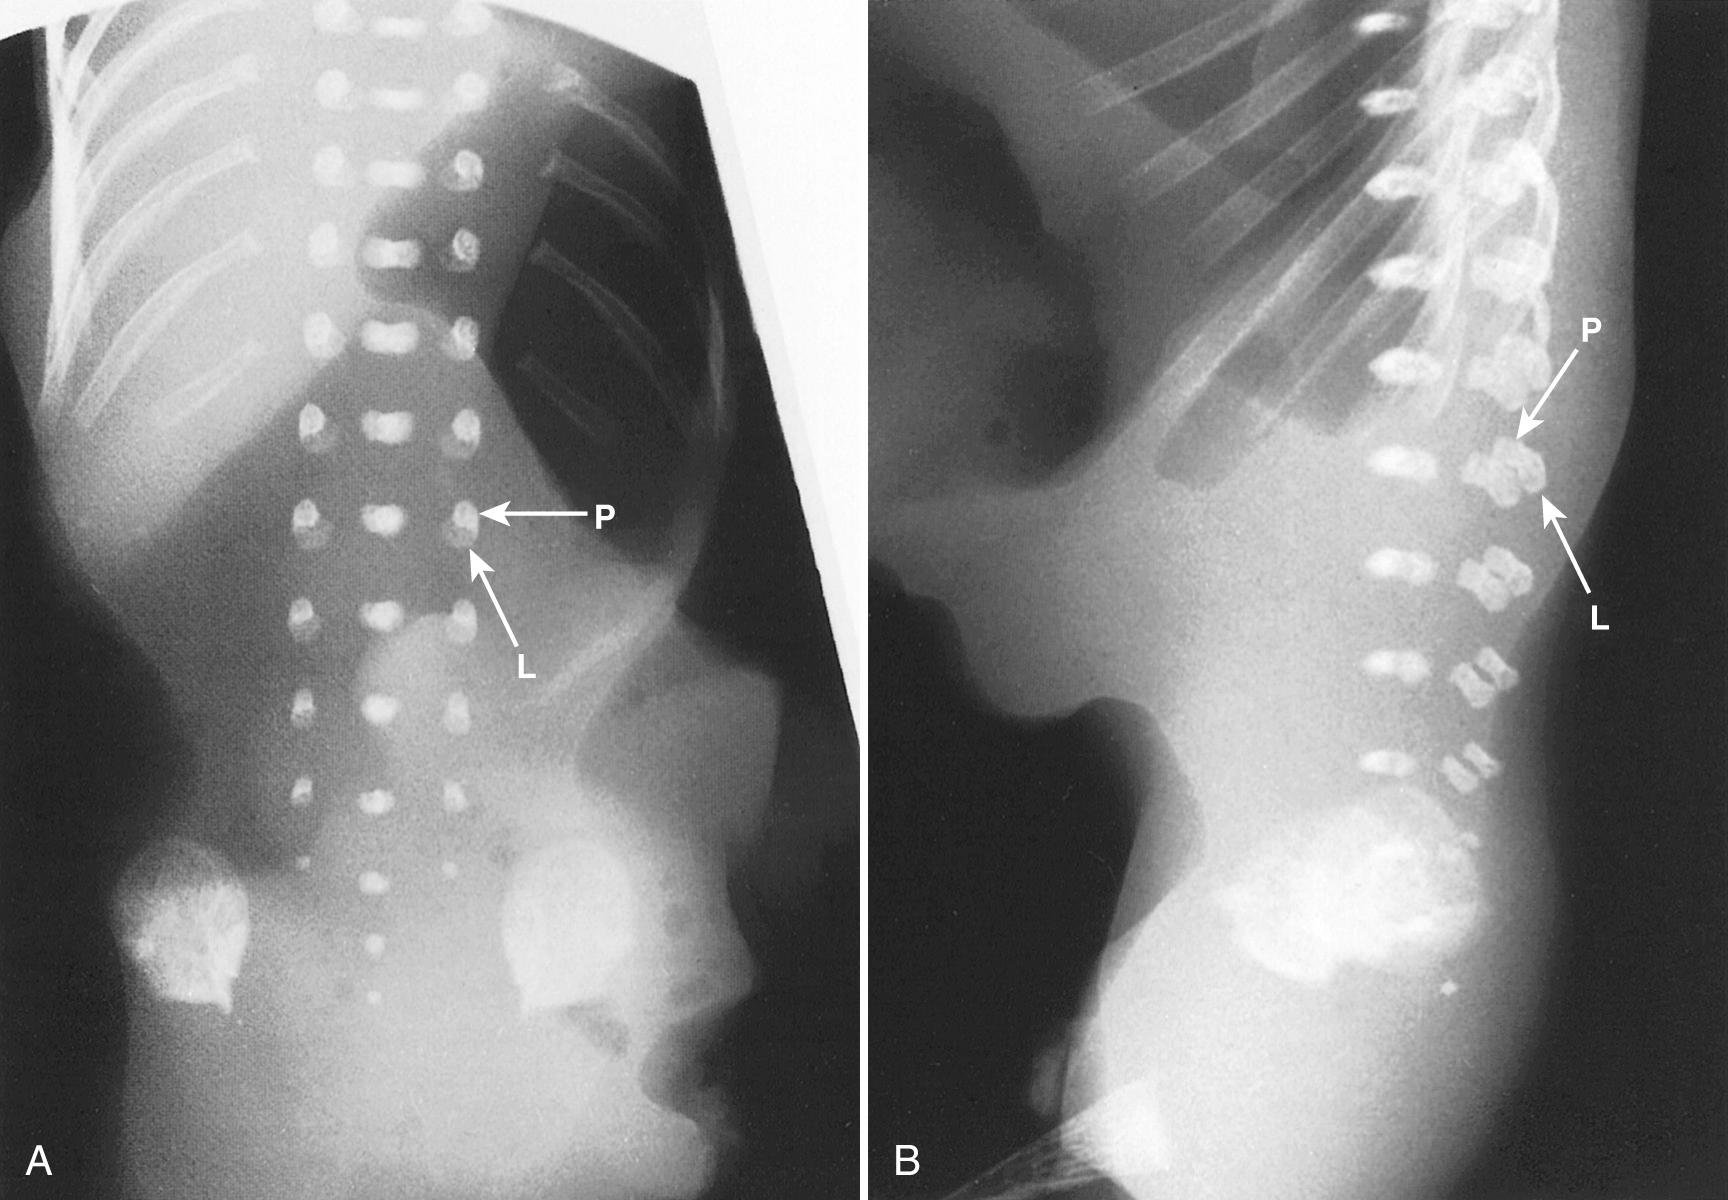 FIG. 35.3, Spine Ossification on Radiographs at 14 Weeks' Gestation.